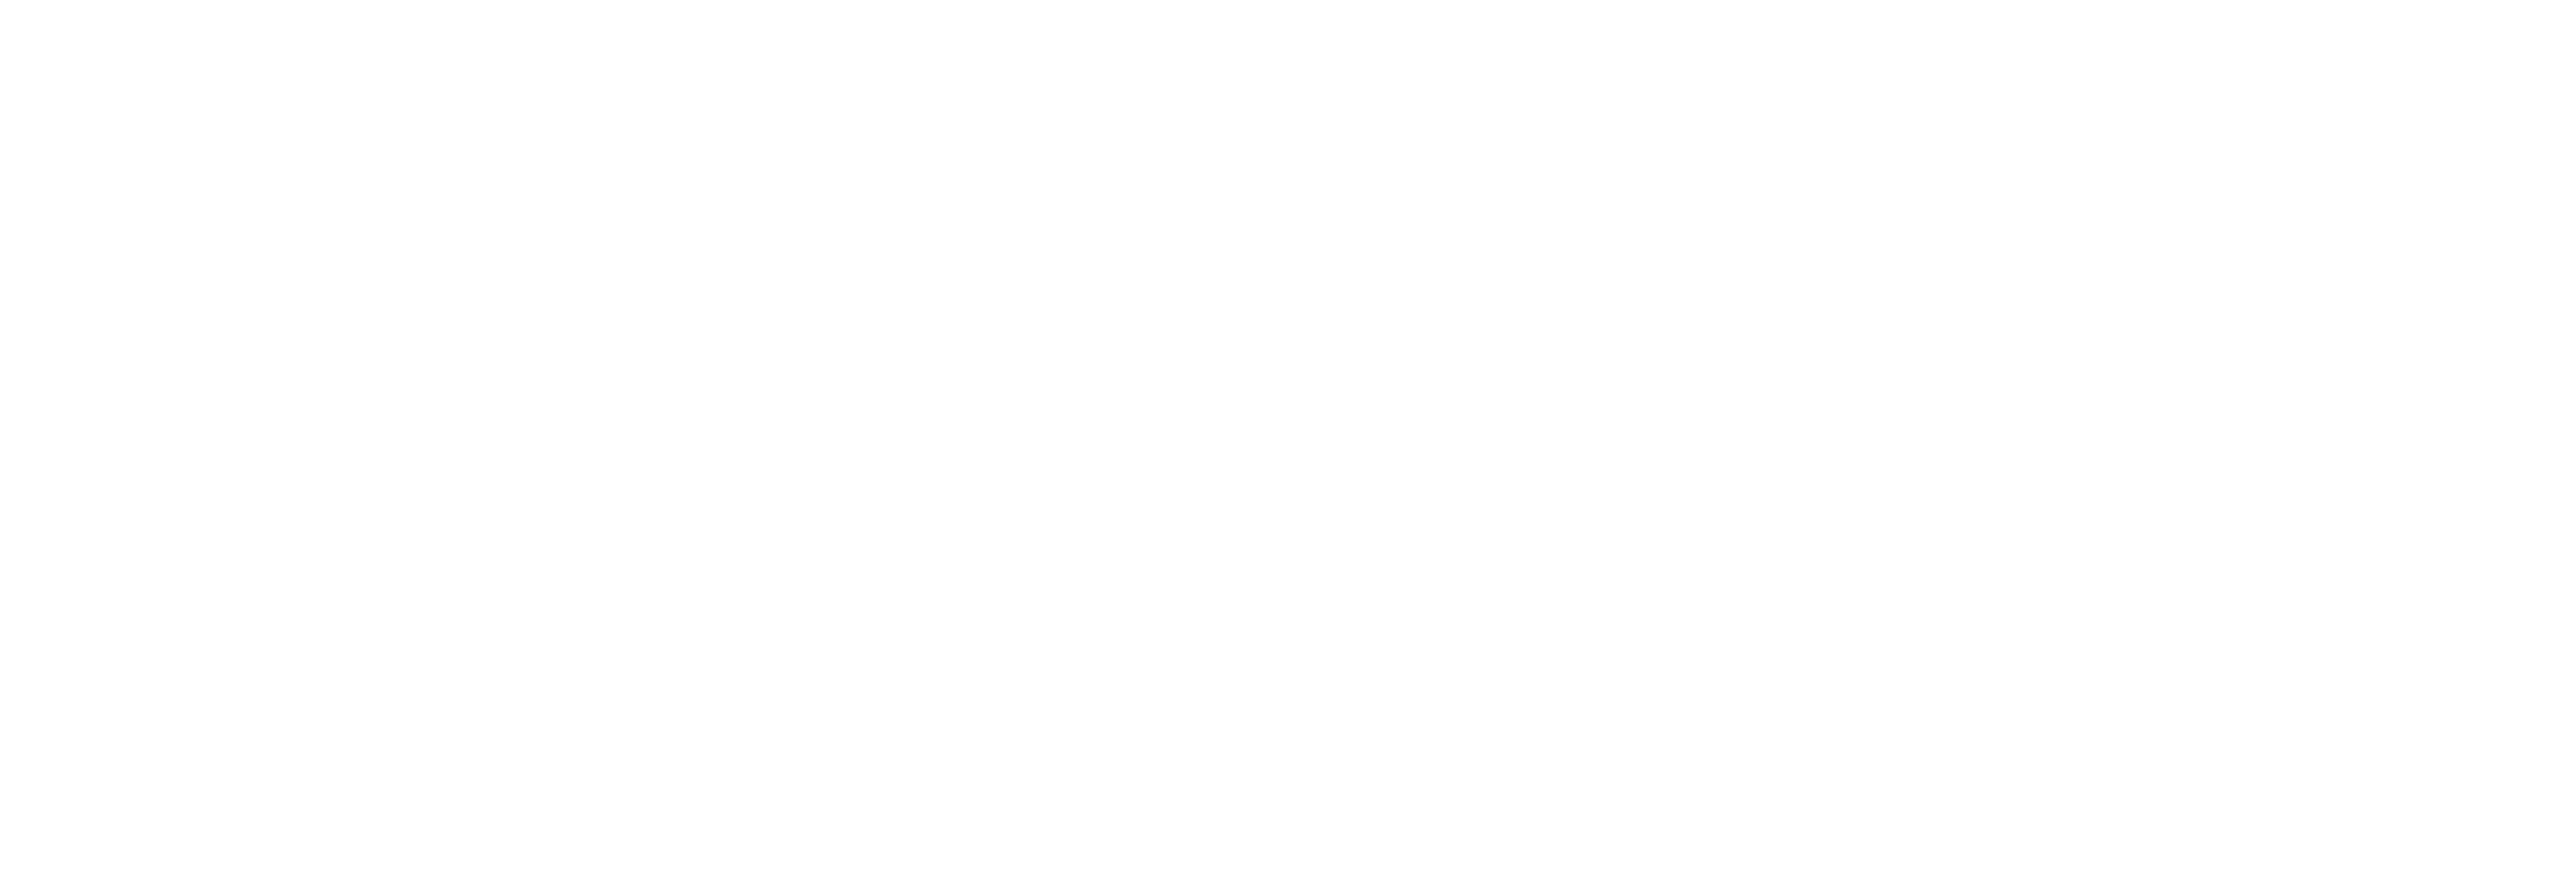 Clinica Veterinaria Tyrus logo